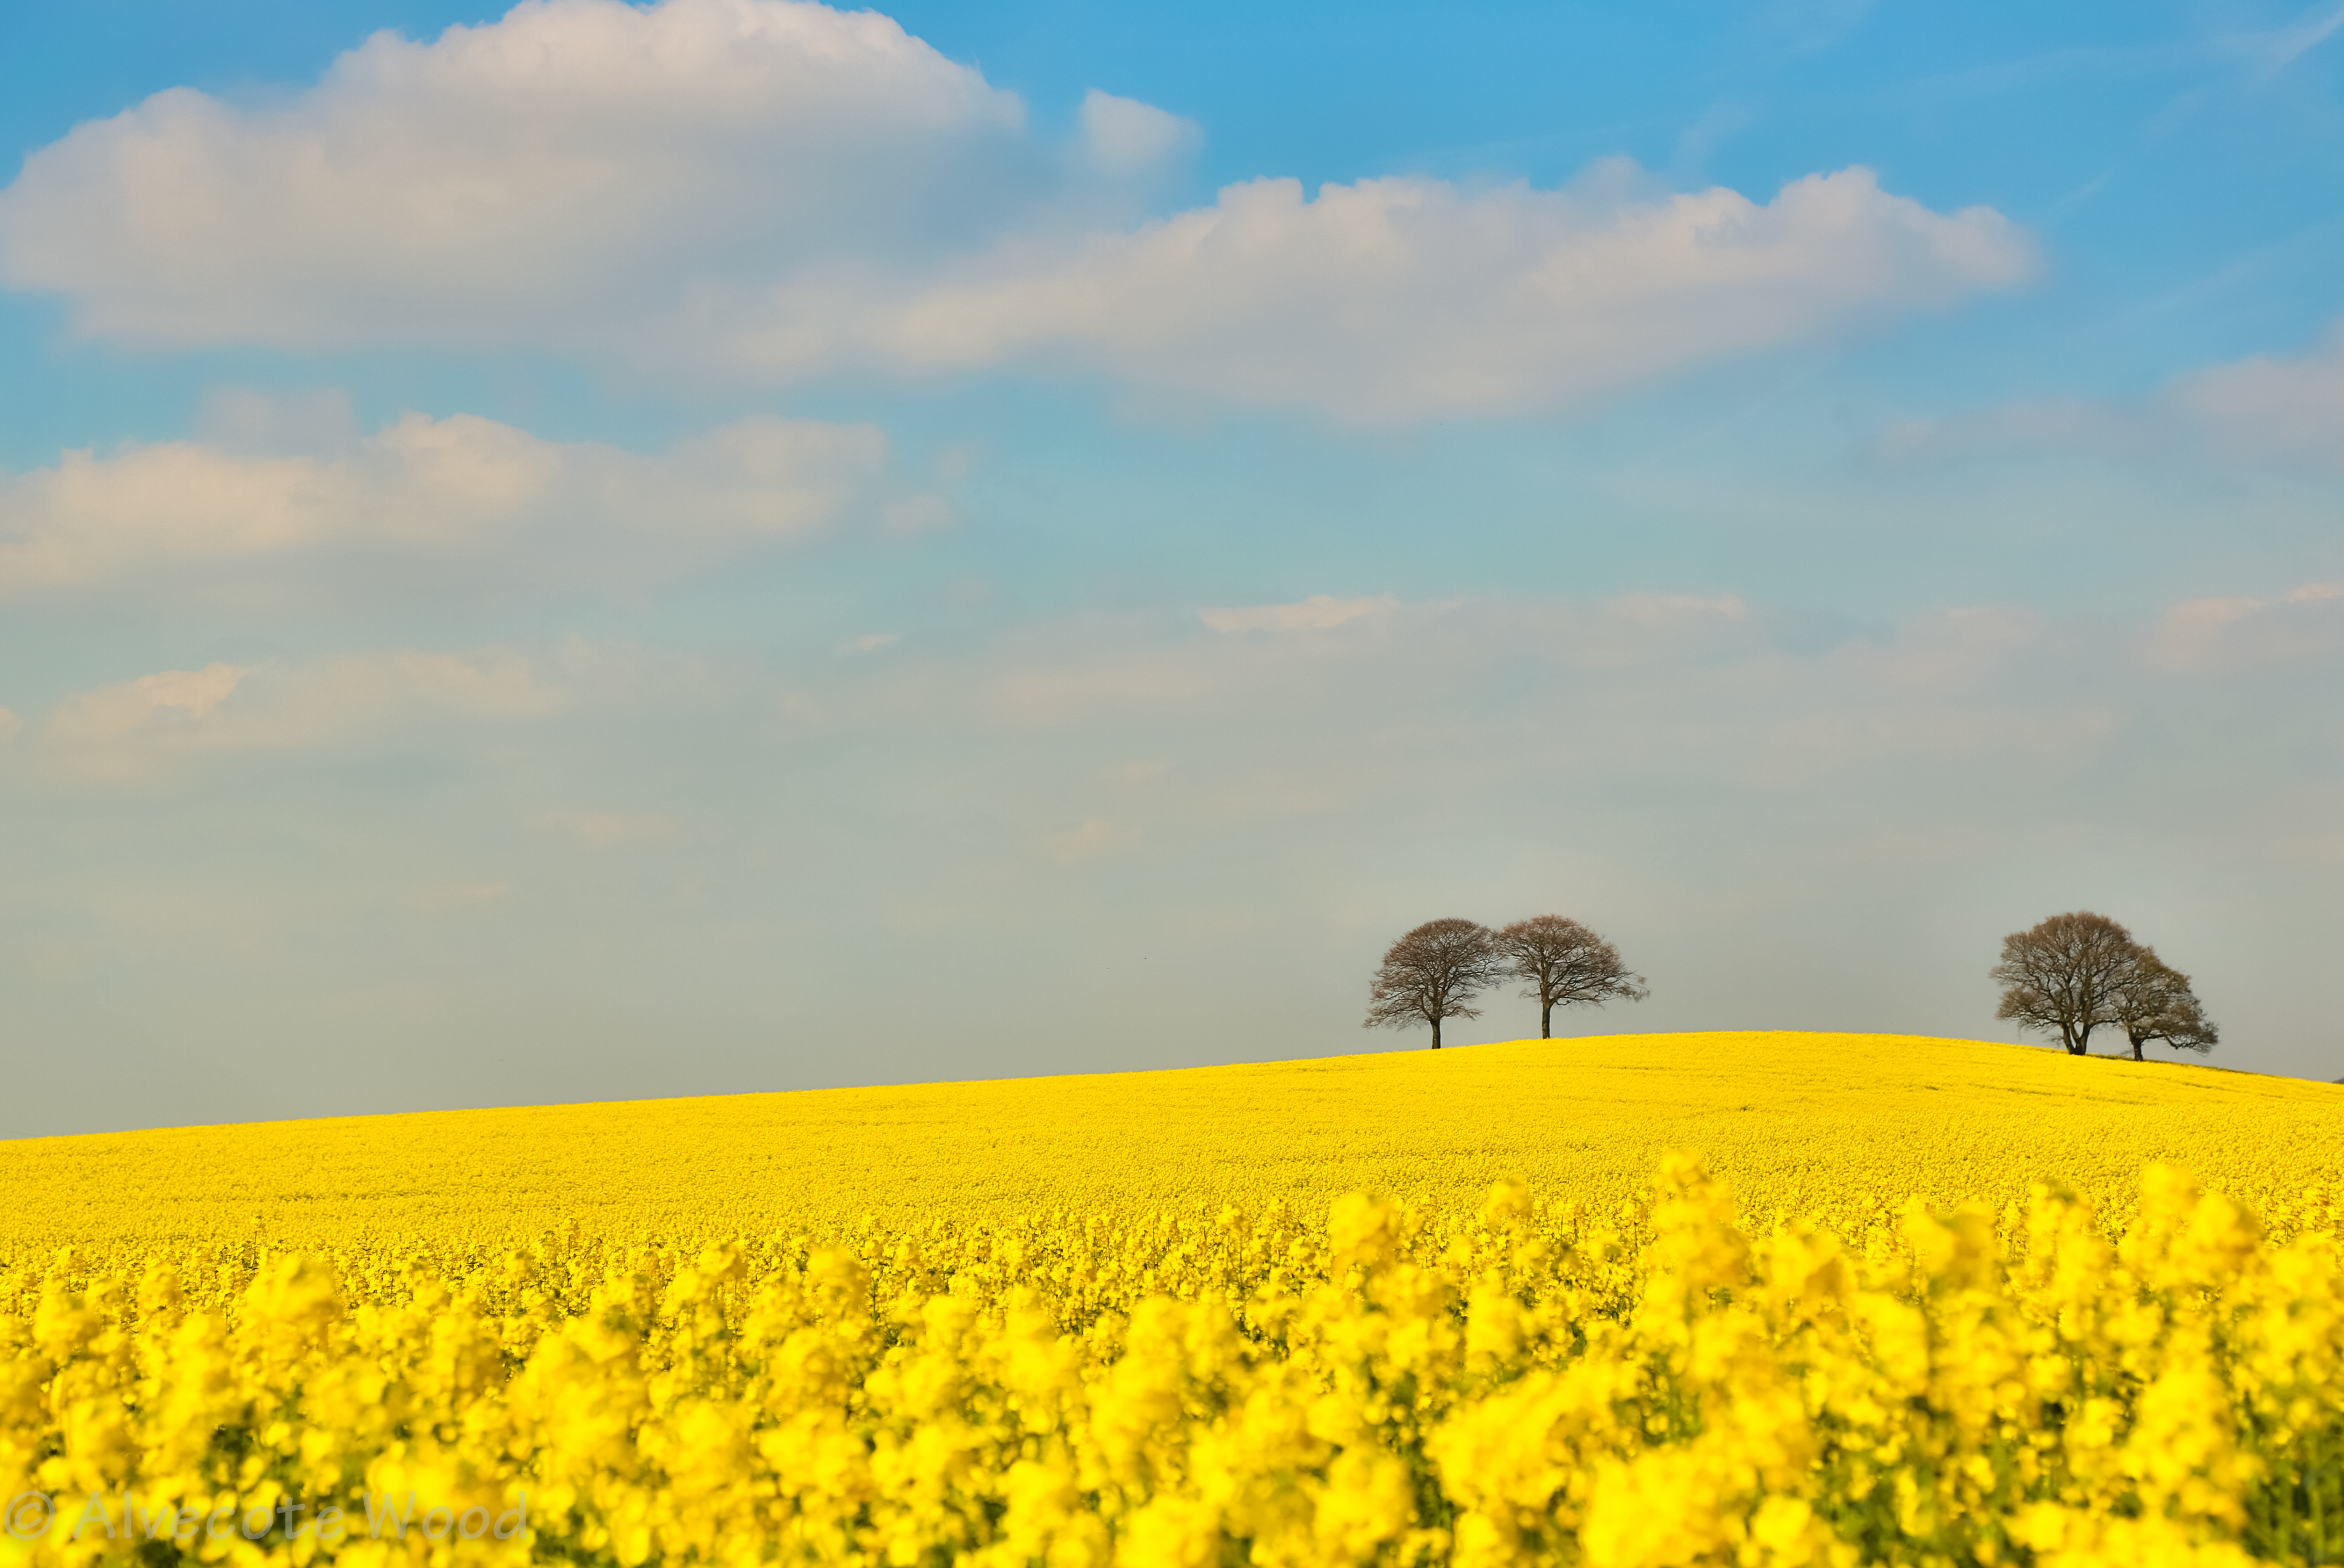 Желтый край экран. Желтый пейзаж. Желтое поле. Пейзаж в желтом цвете. Желтый цвет в природе.